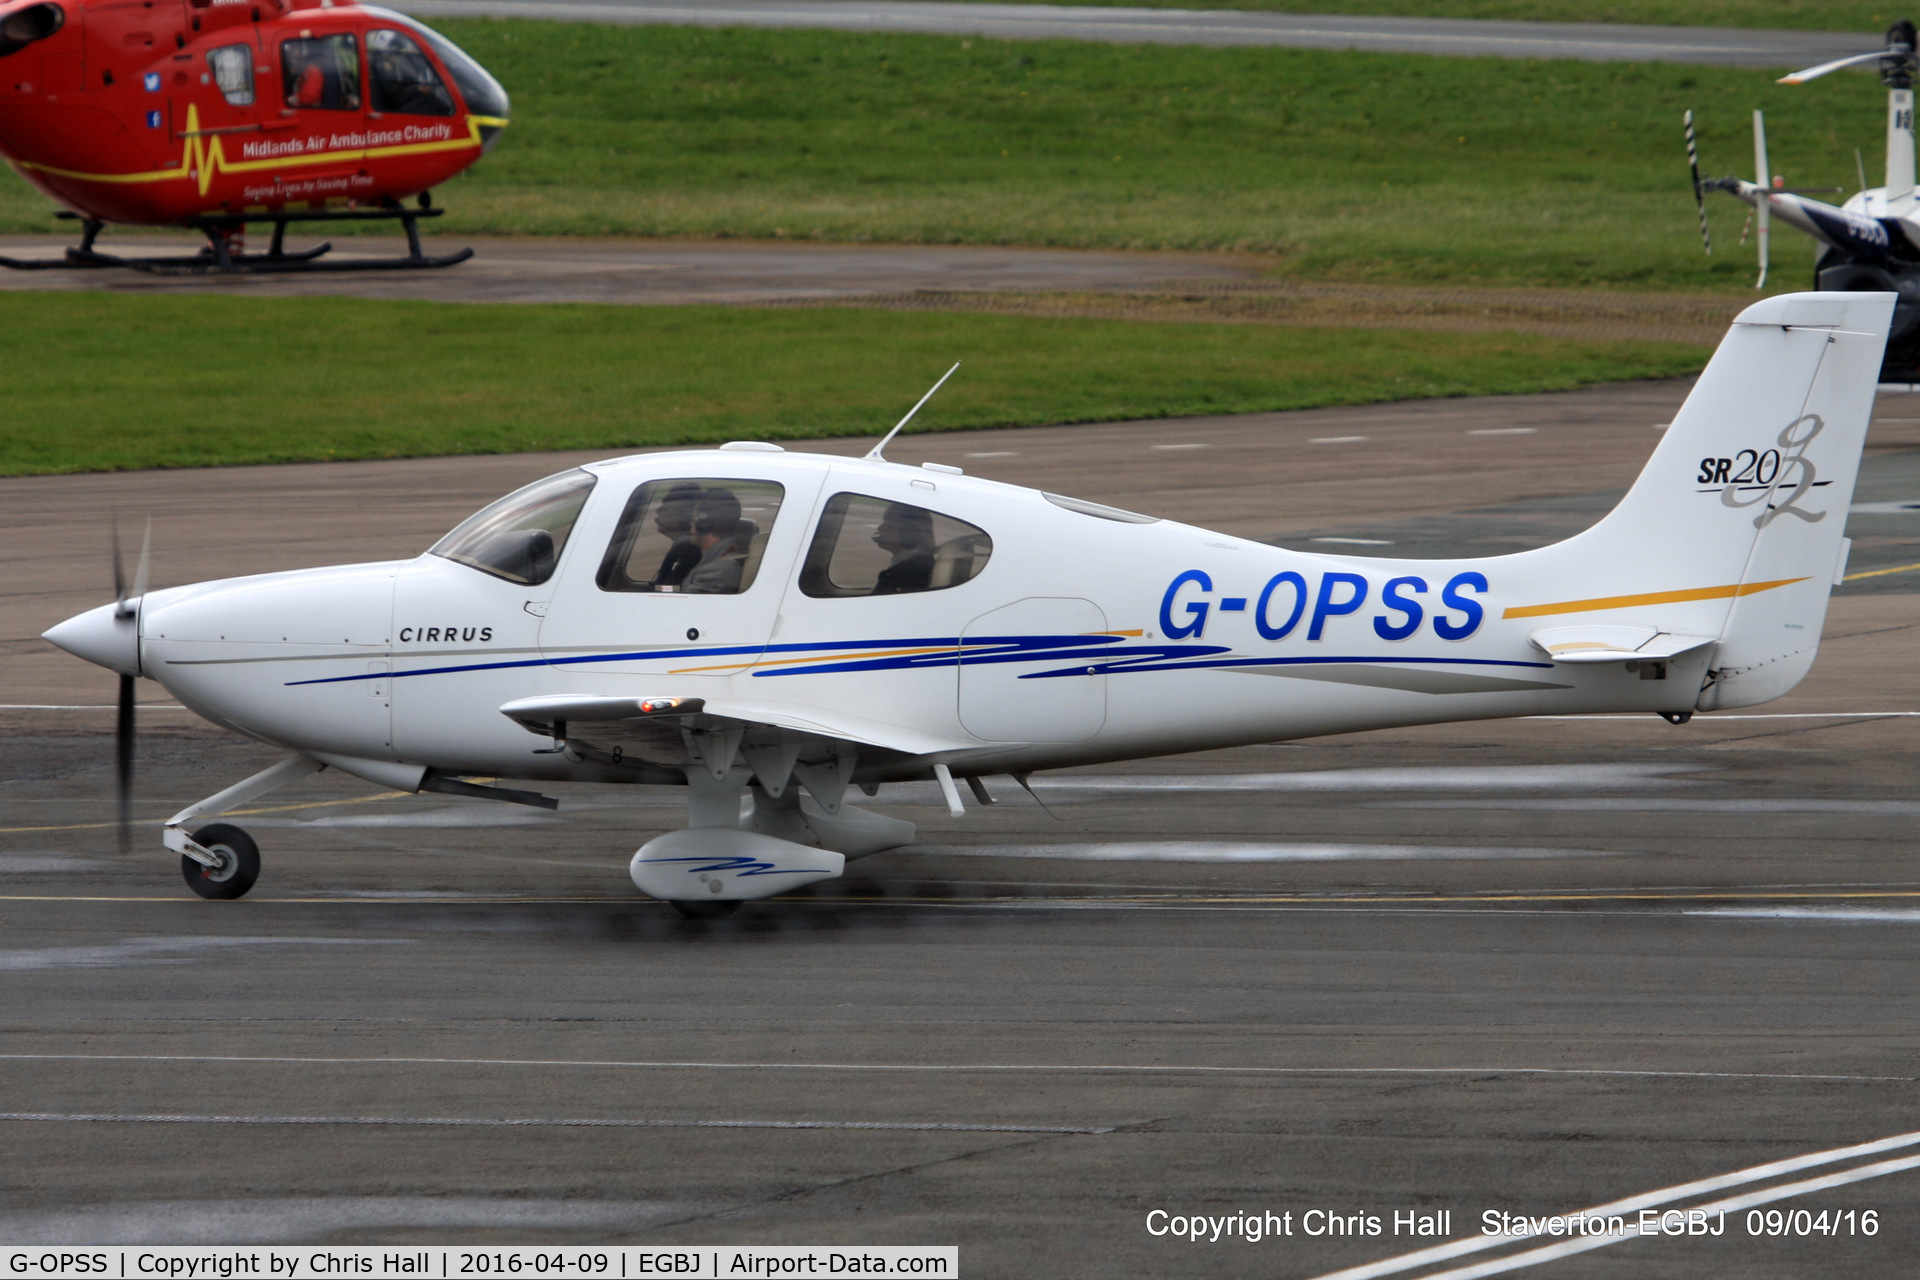 G-OPSS, 2004 Cirrus SR20 G2 C/N 1458, at Staverton